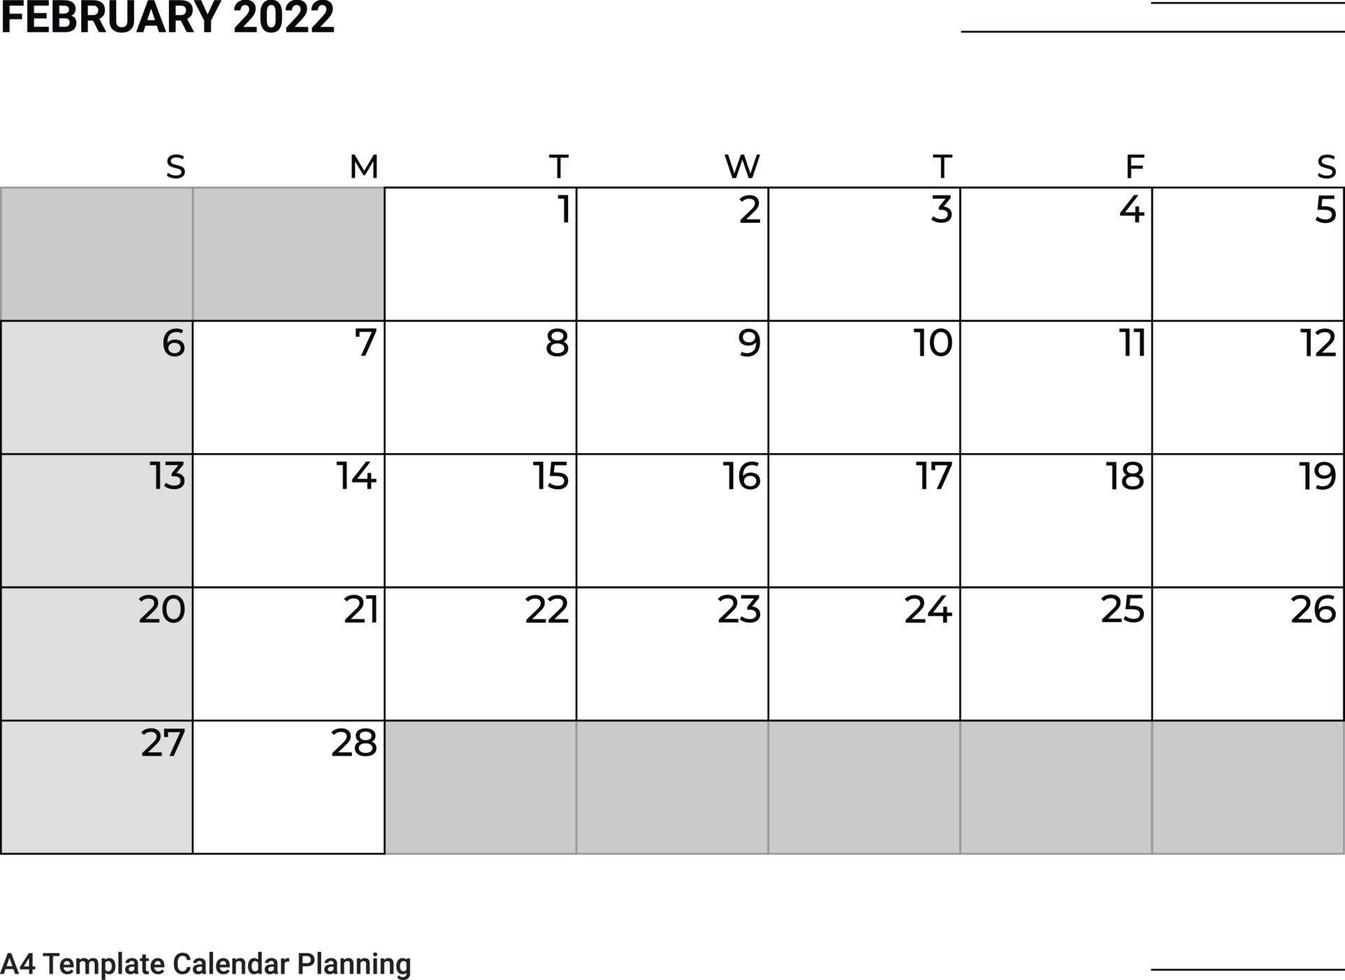 planningskalender februari 2022 vector